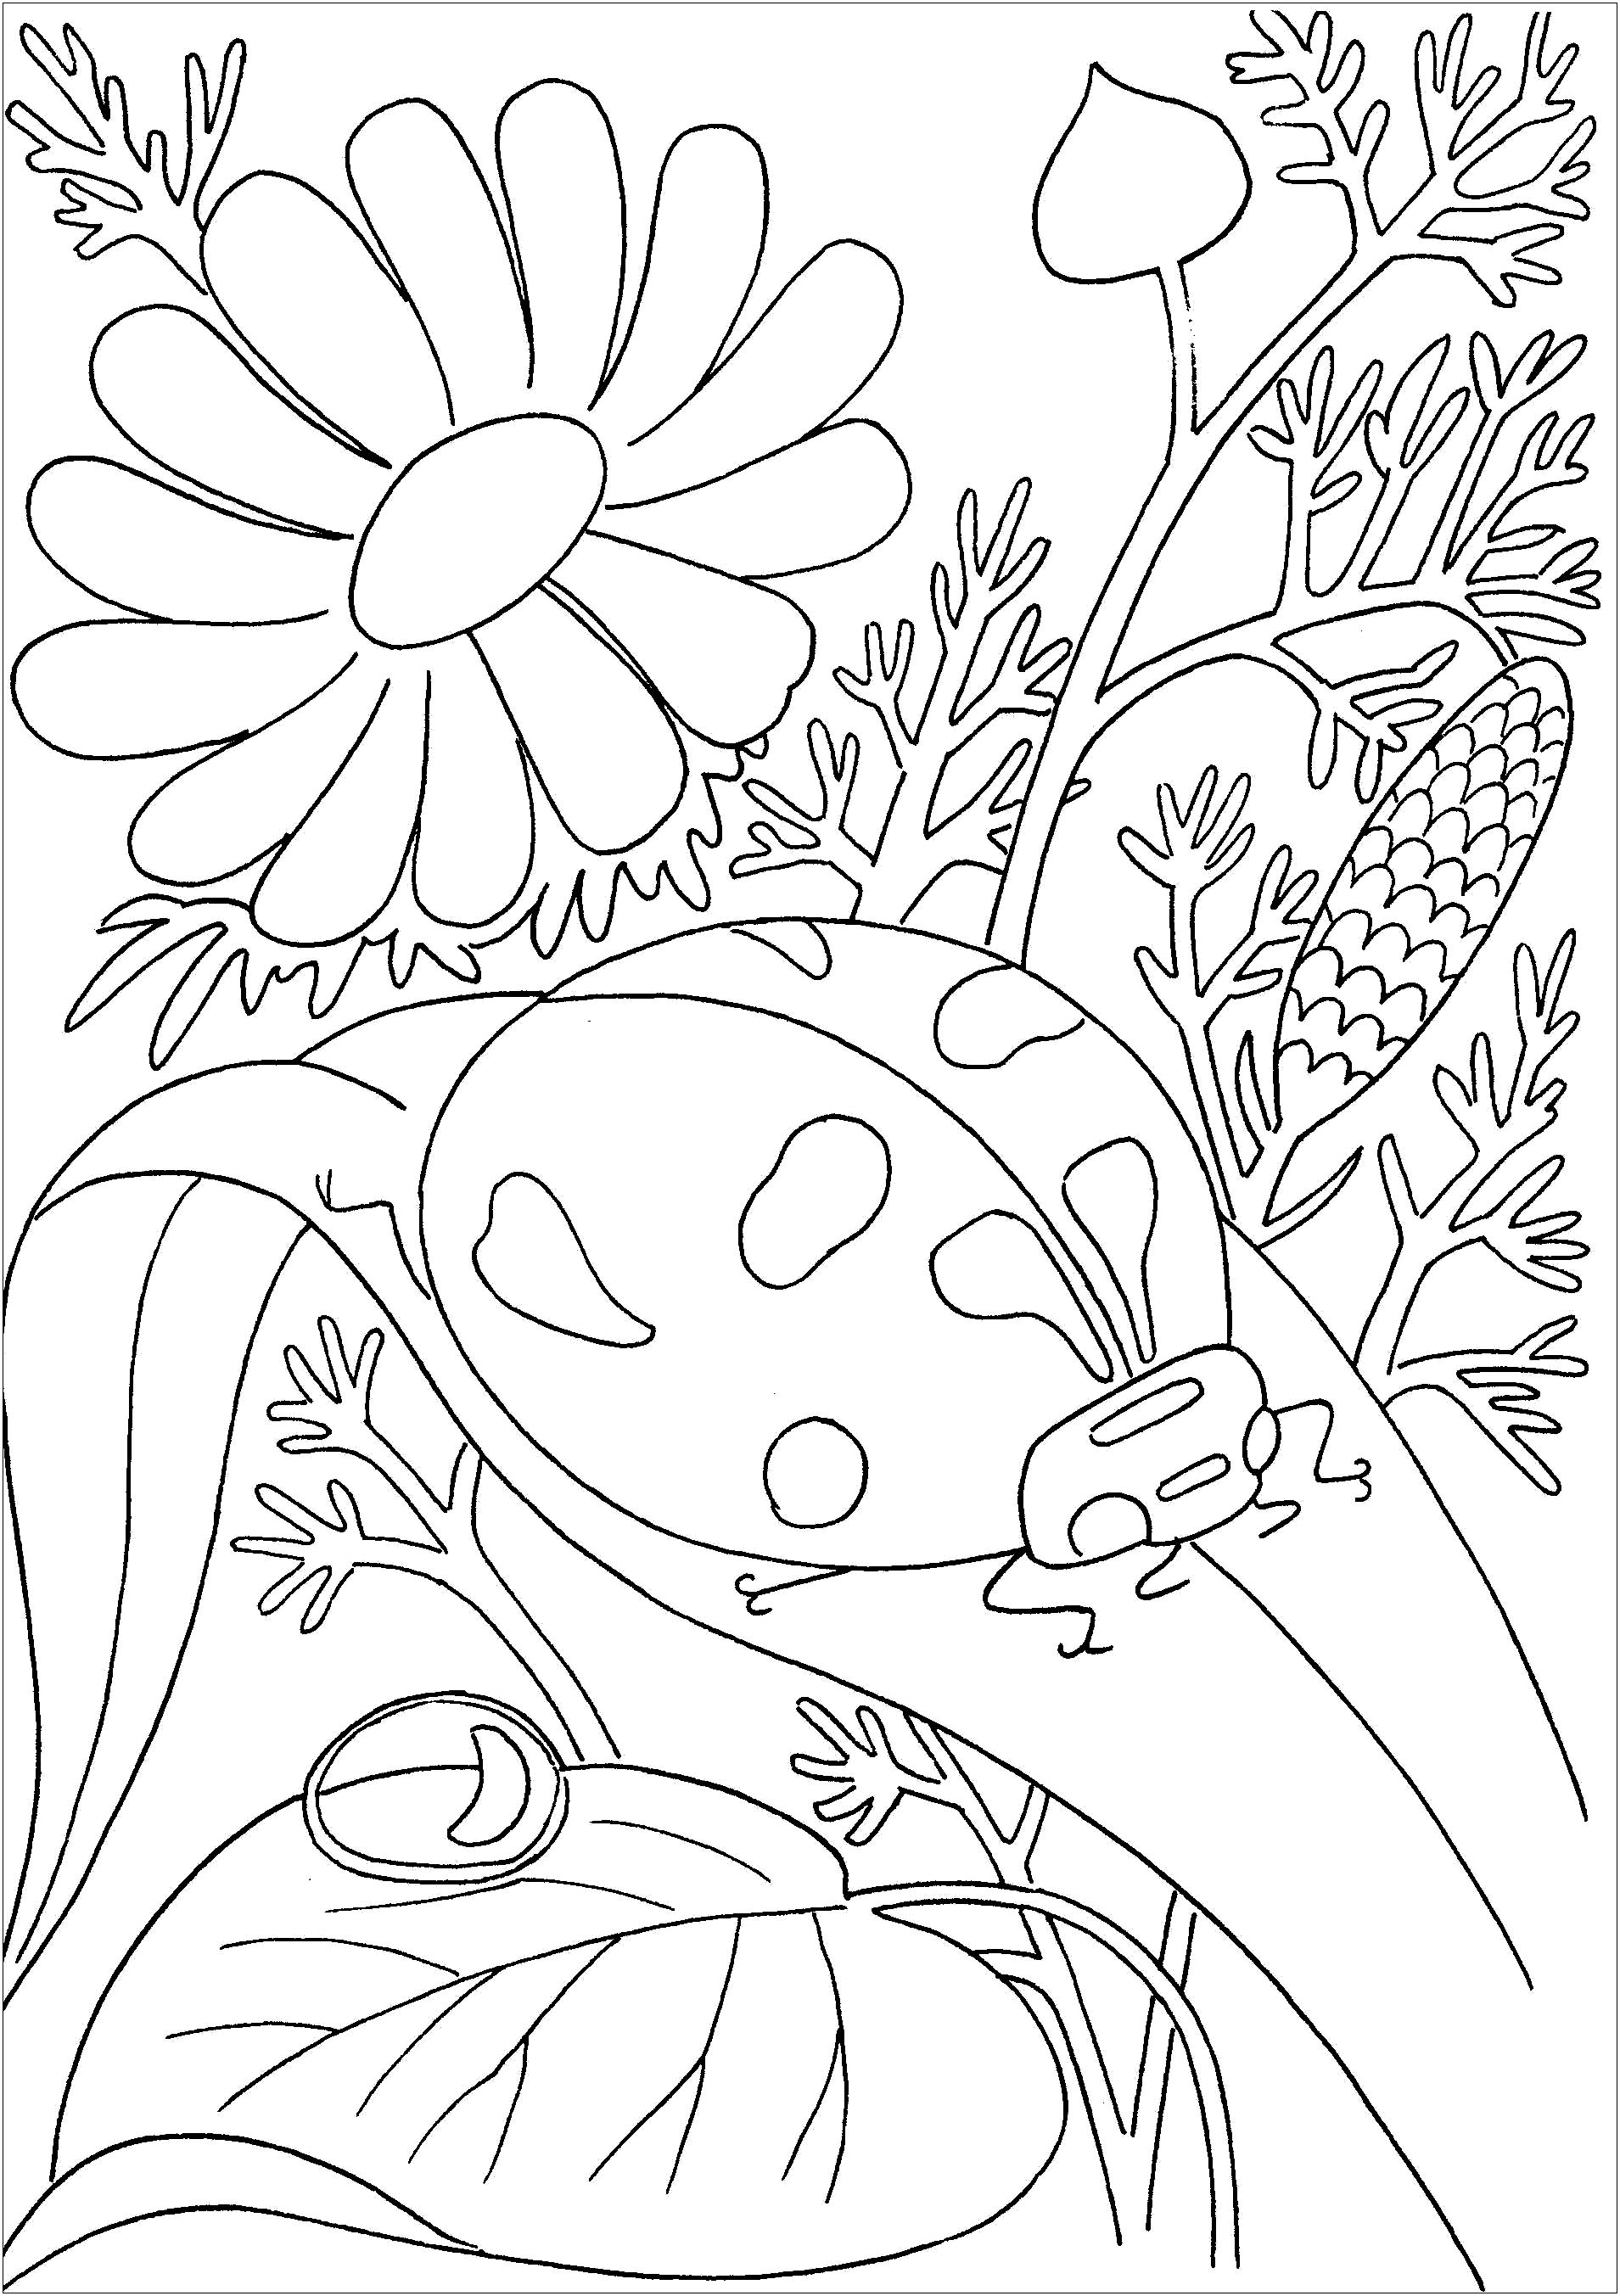 La mariquita camina sobre su rama rodeada de flores.